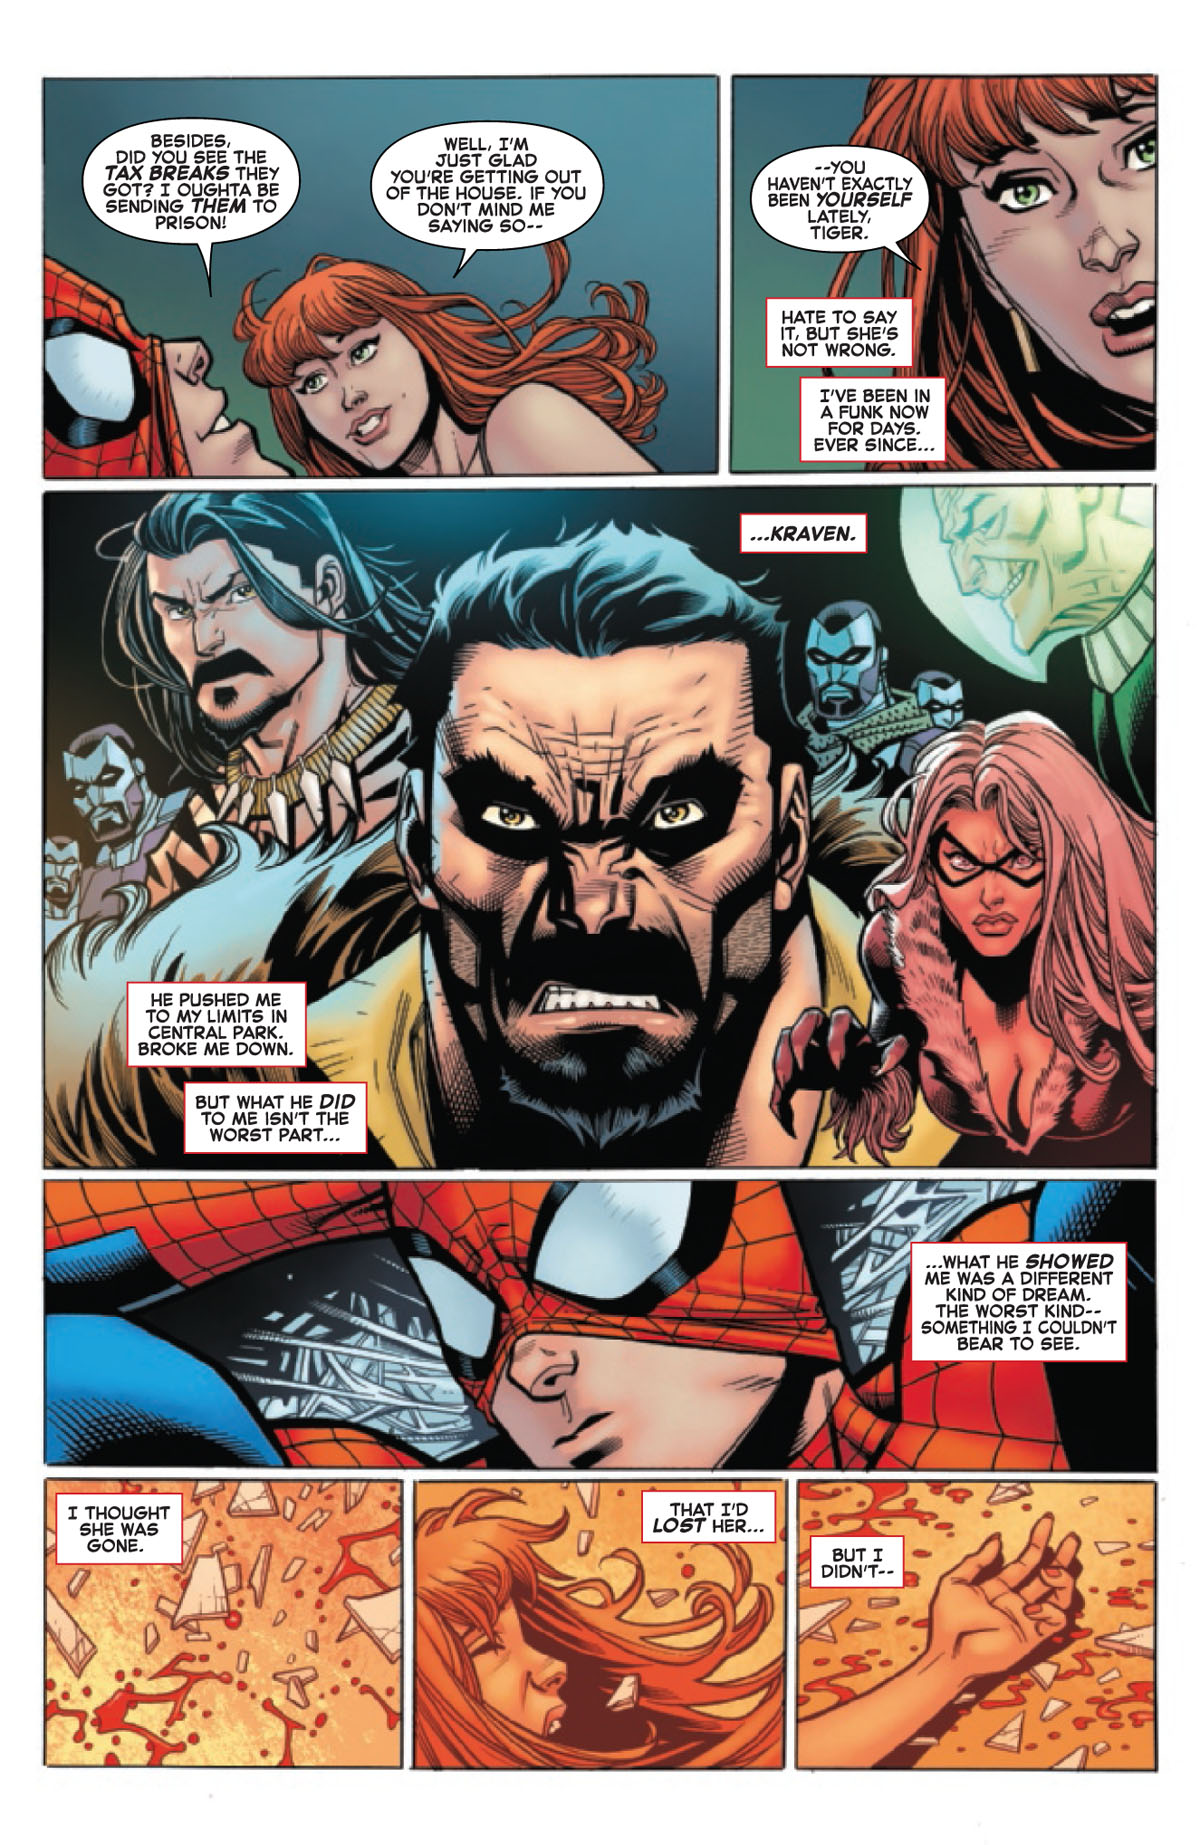 Amazing Spider-Man #24 page 3